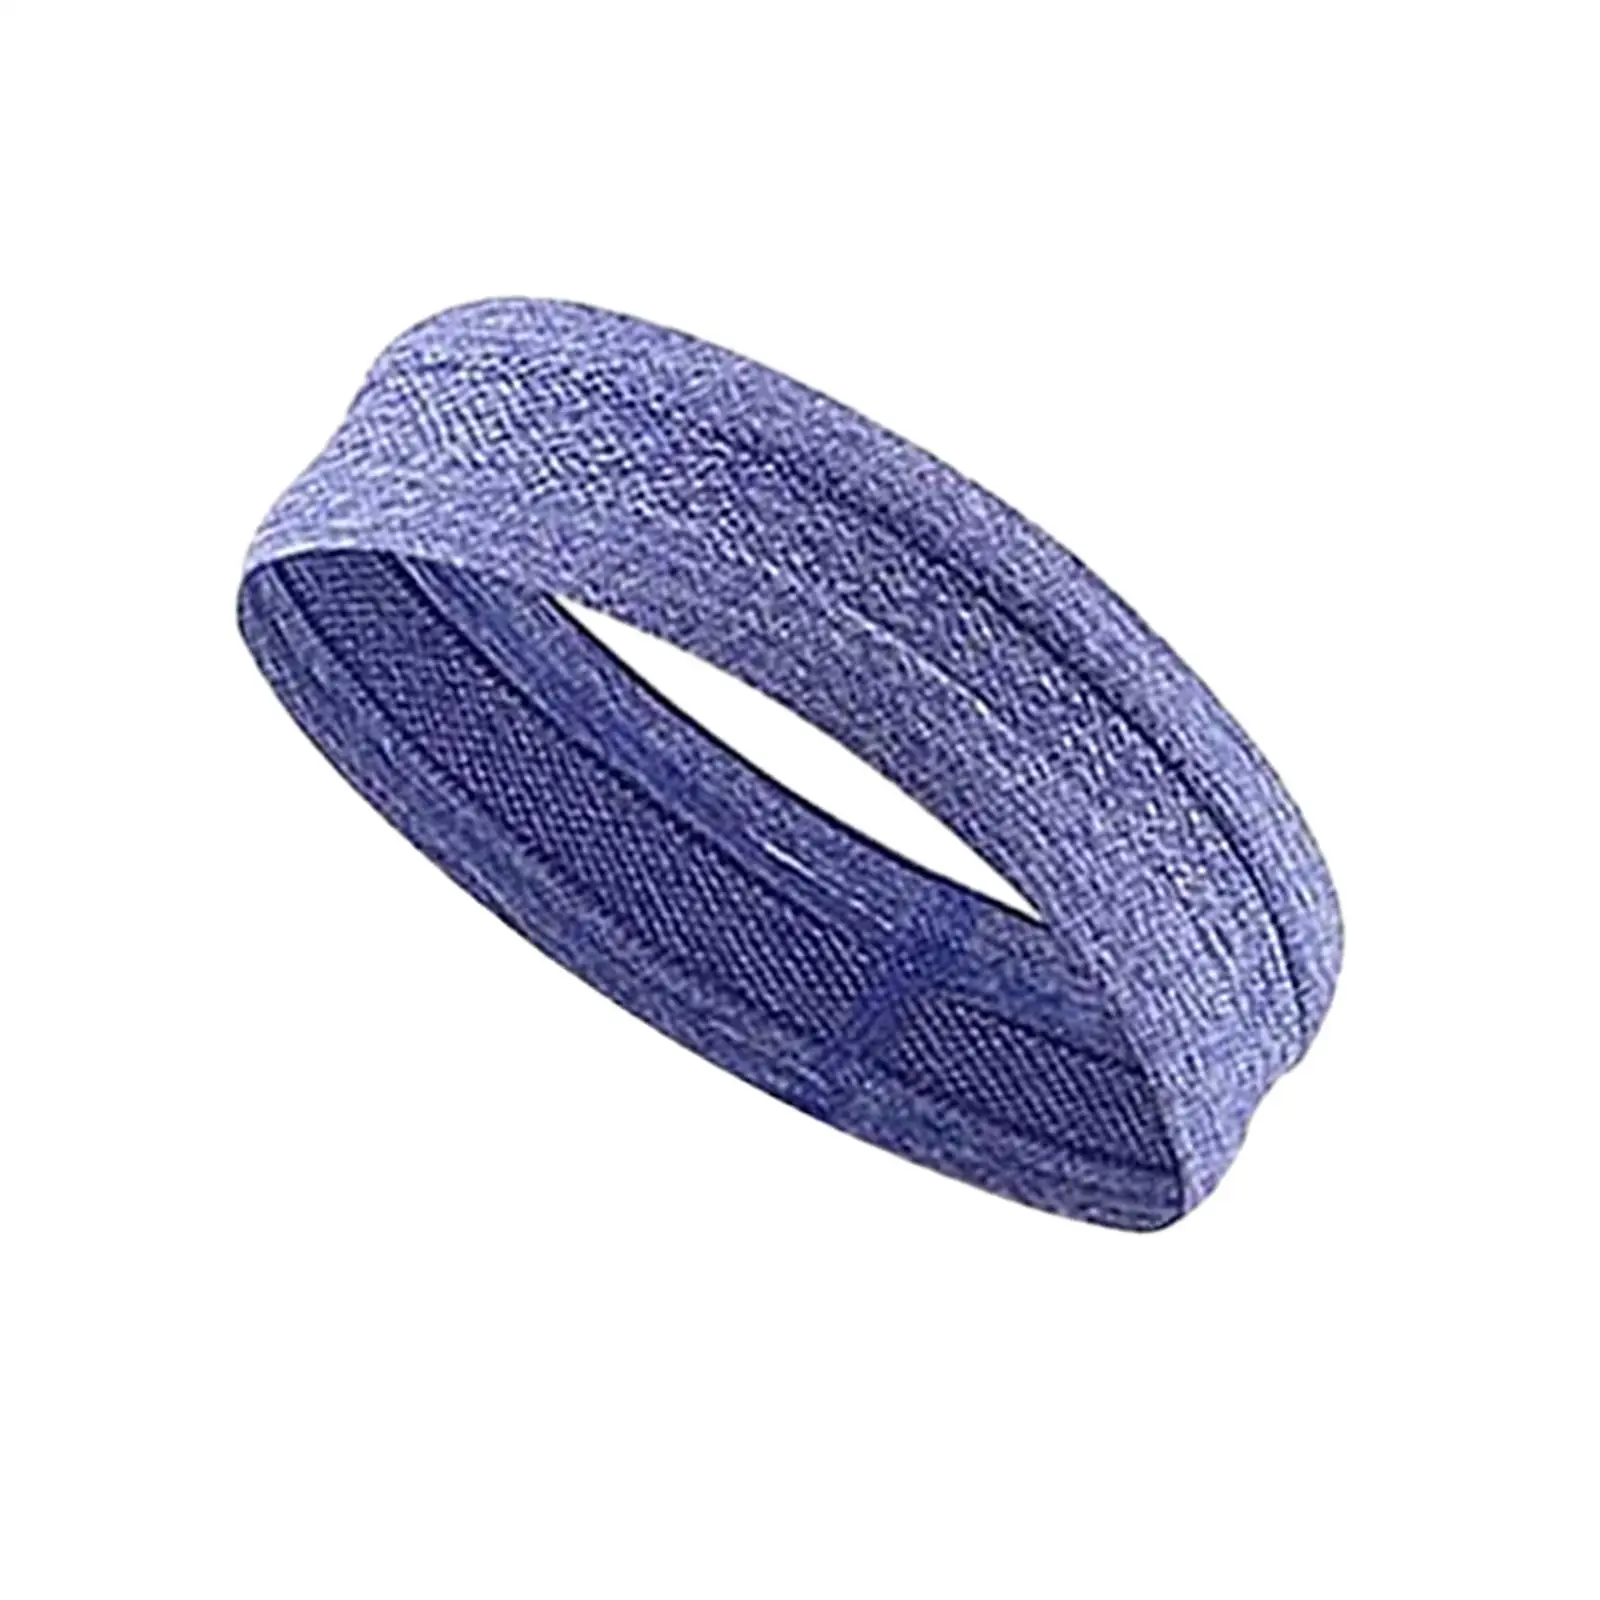 Sweatband Absorb Sweat Soft Elastic Anti Slip Hair Band Wrap Head Wrap Sports Headbands for Running Basketball Gym Tennis Sports